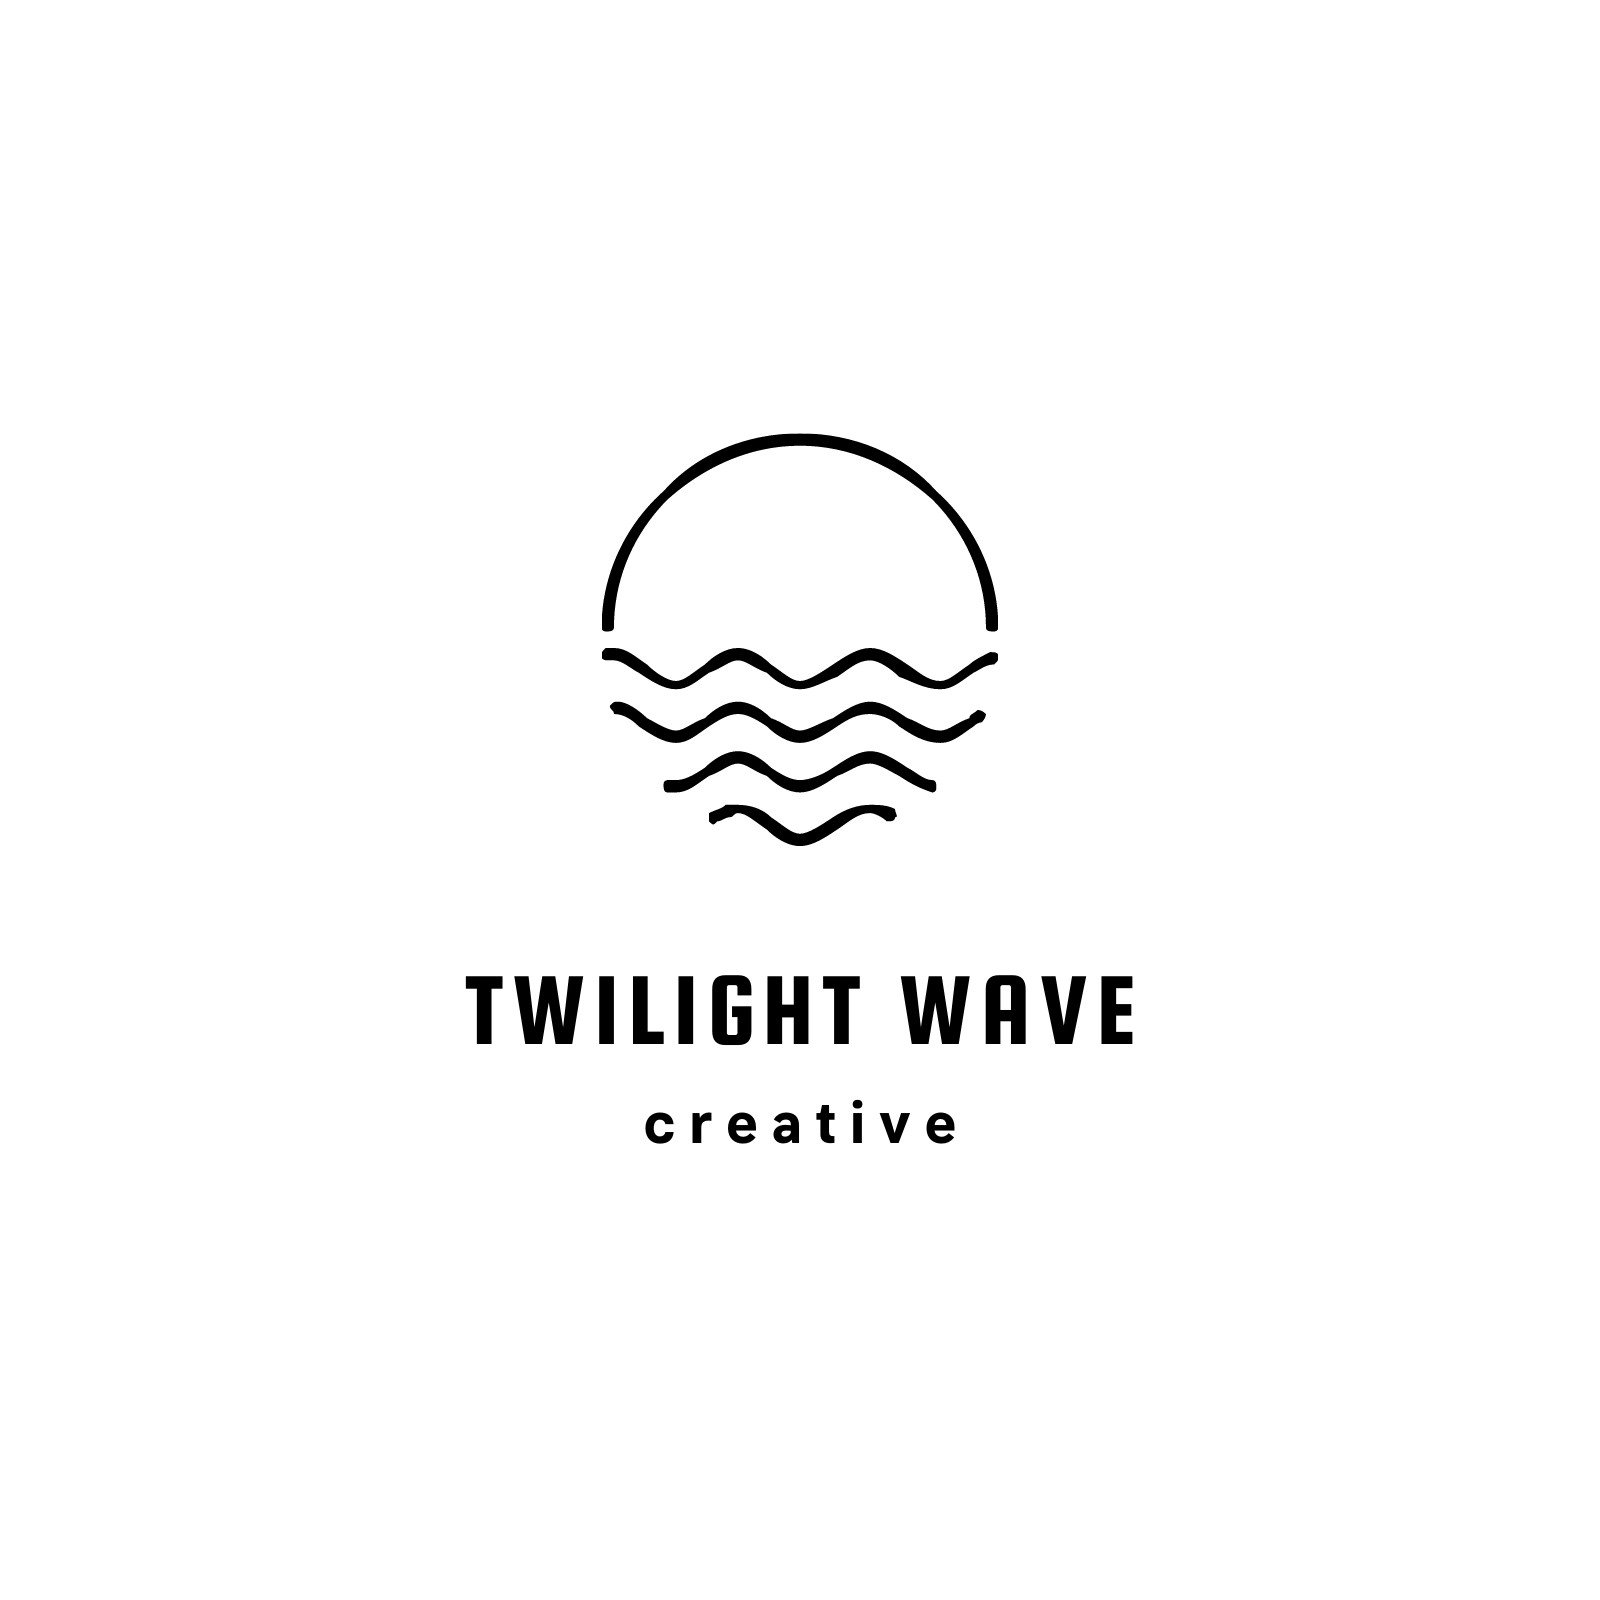 Creative wave logo design symbol template Vector Image